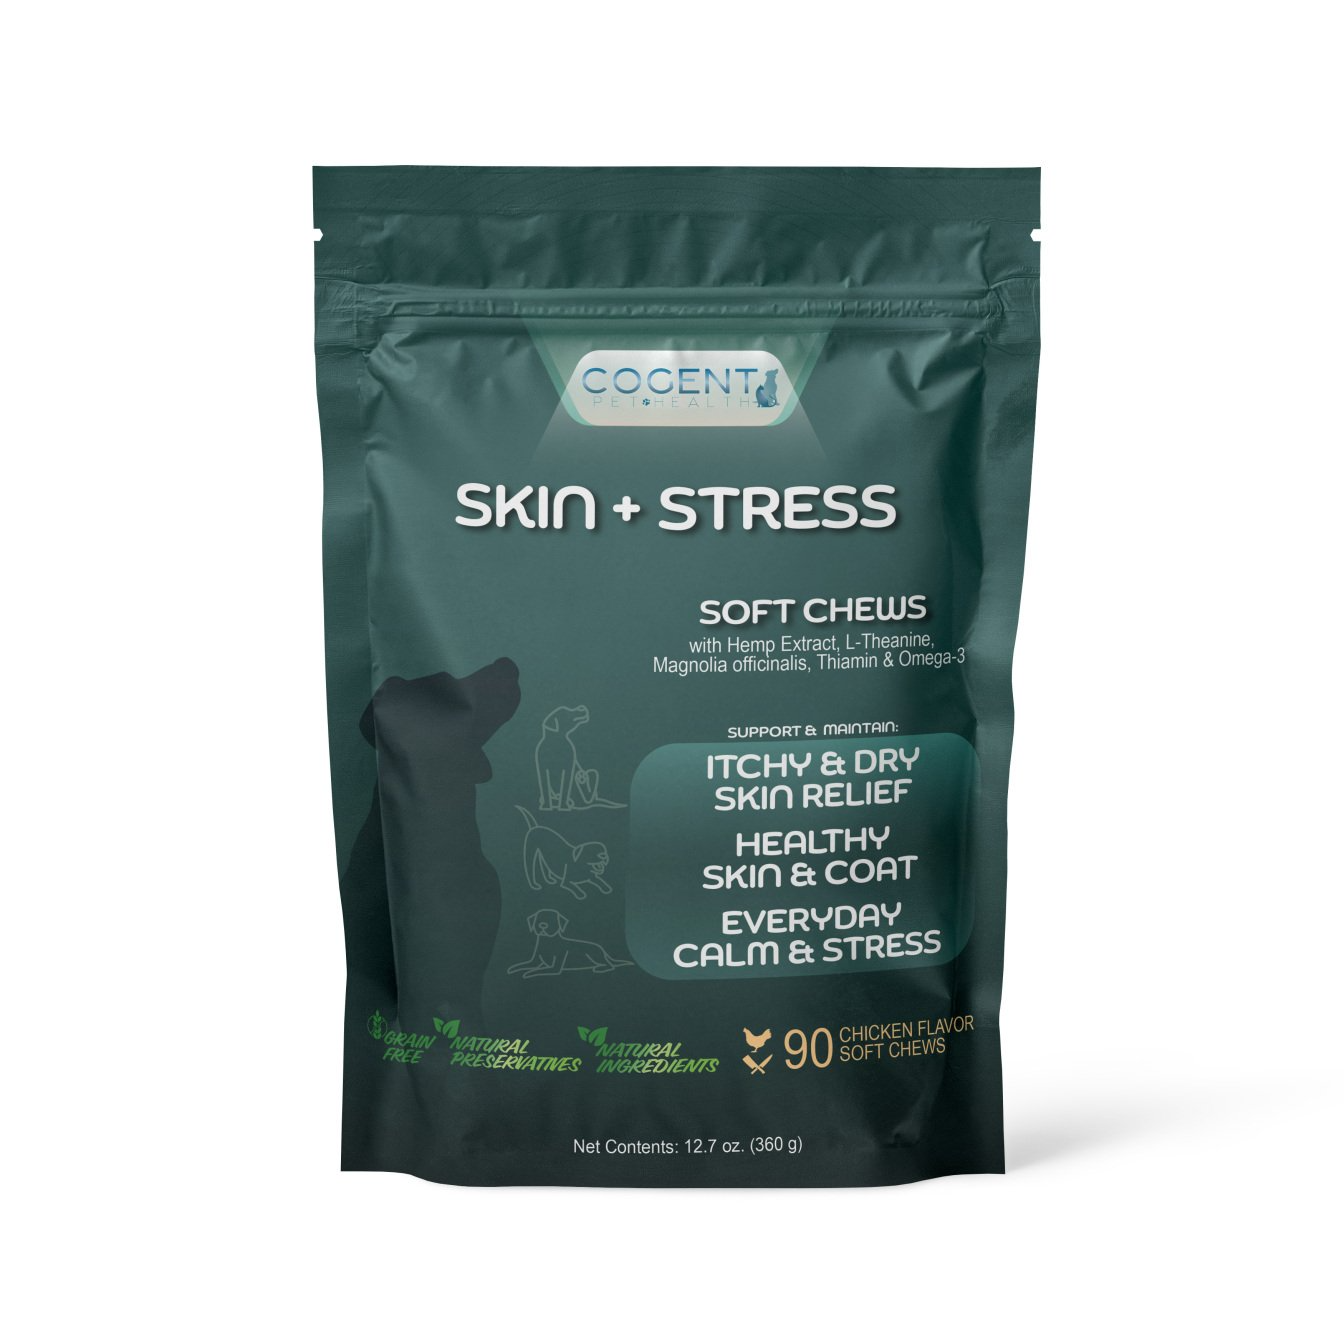 Skin + Stress Soft Chews - 90 Count